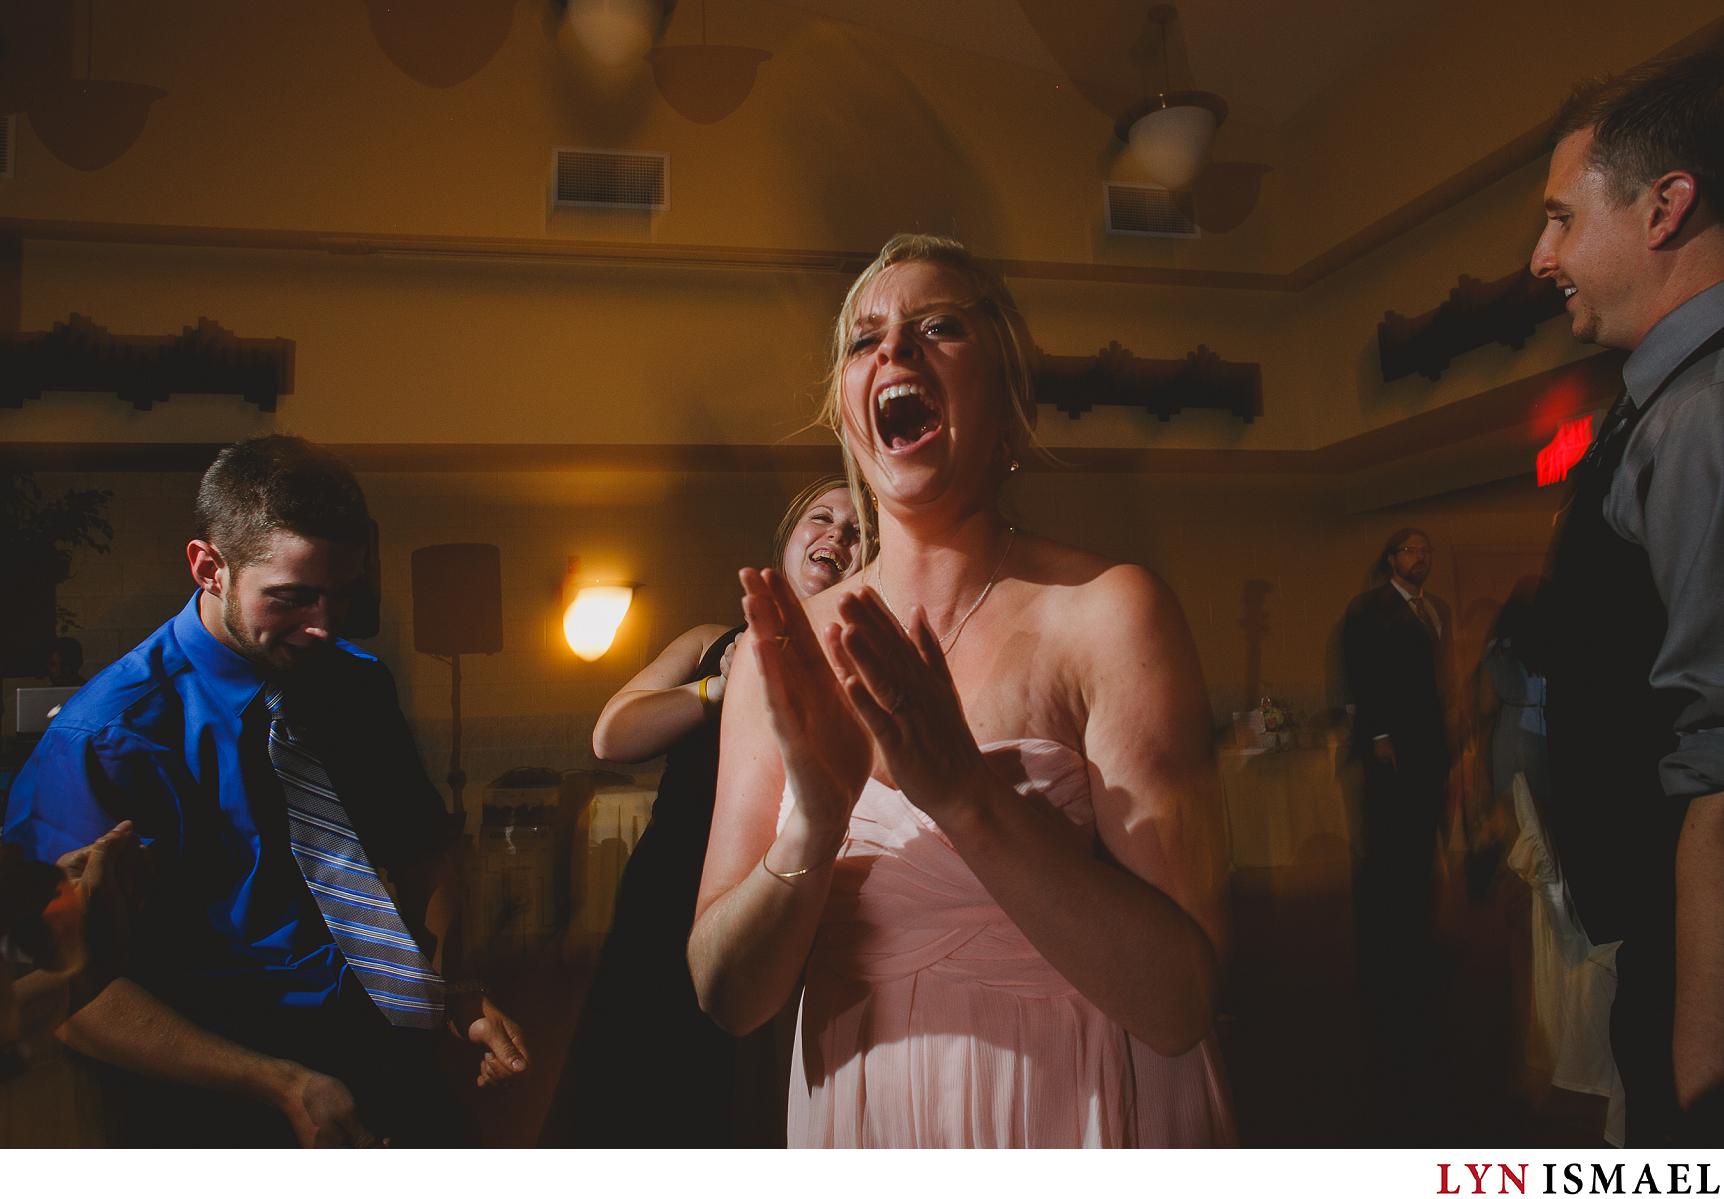 A bridesmaid dancing at her friend's wedding reception in Stoney Creek, Ontario.